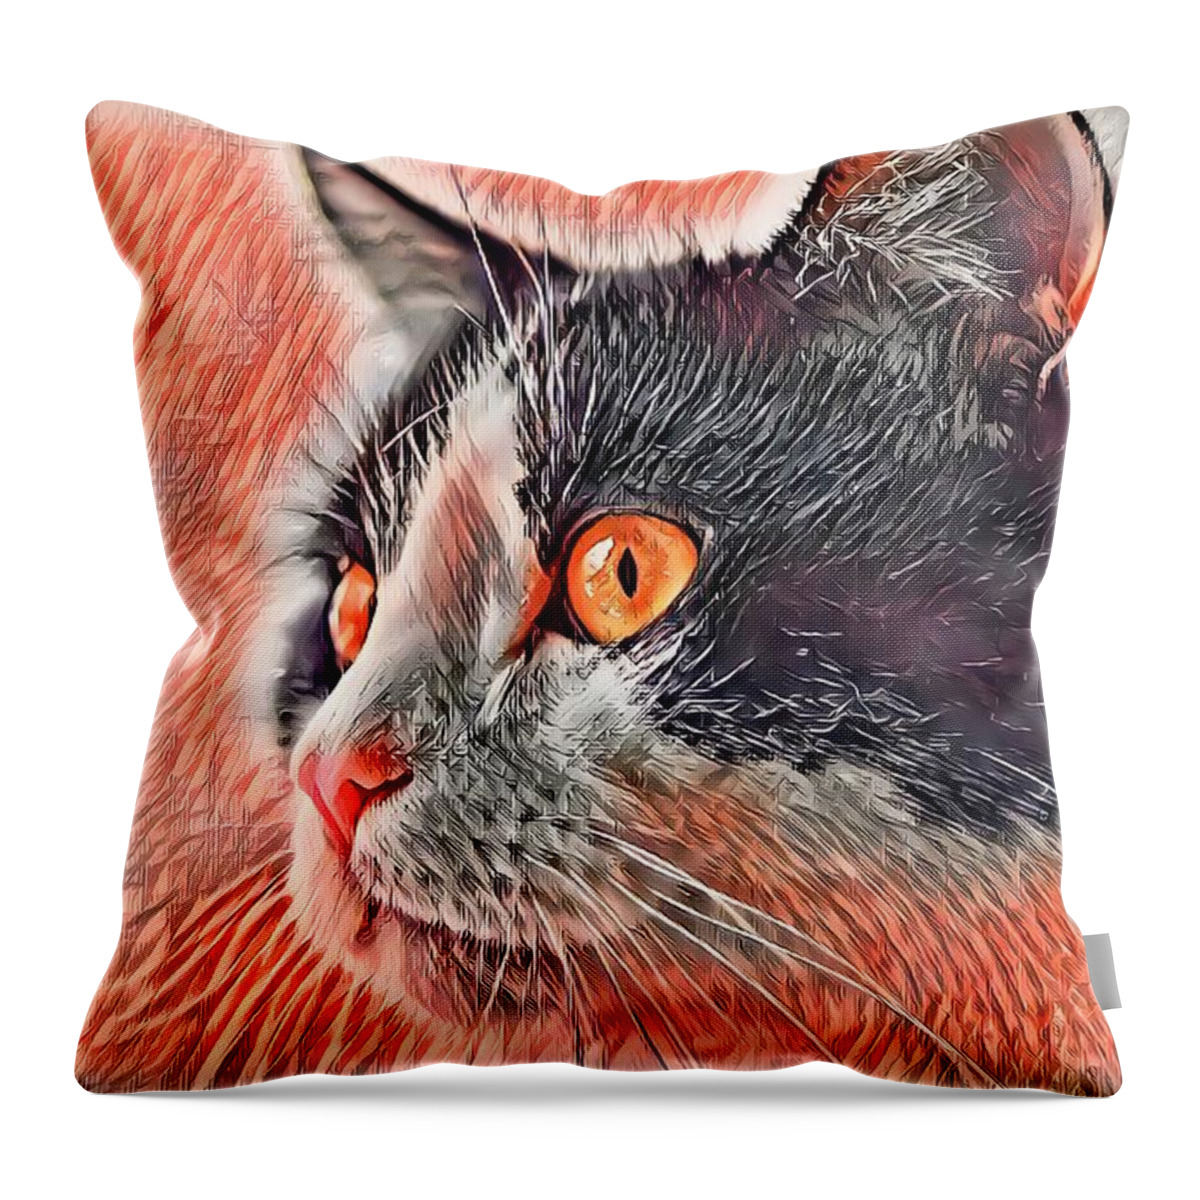 Tuxedo Cat Throw Pillow featuring the digital art Big Head Tuxedo Cat Orange Eyes by Don Northup